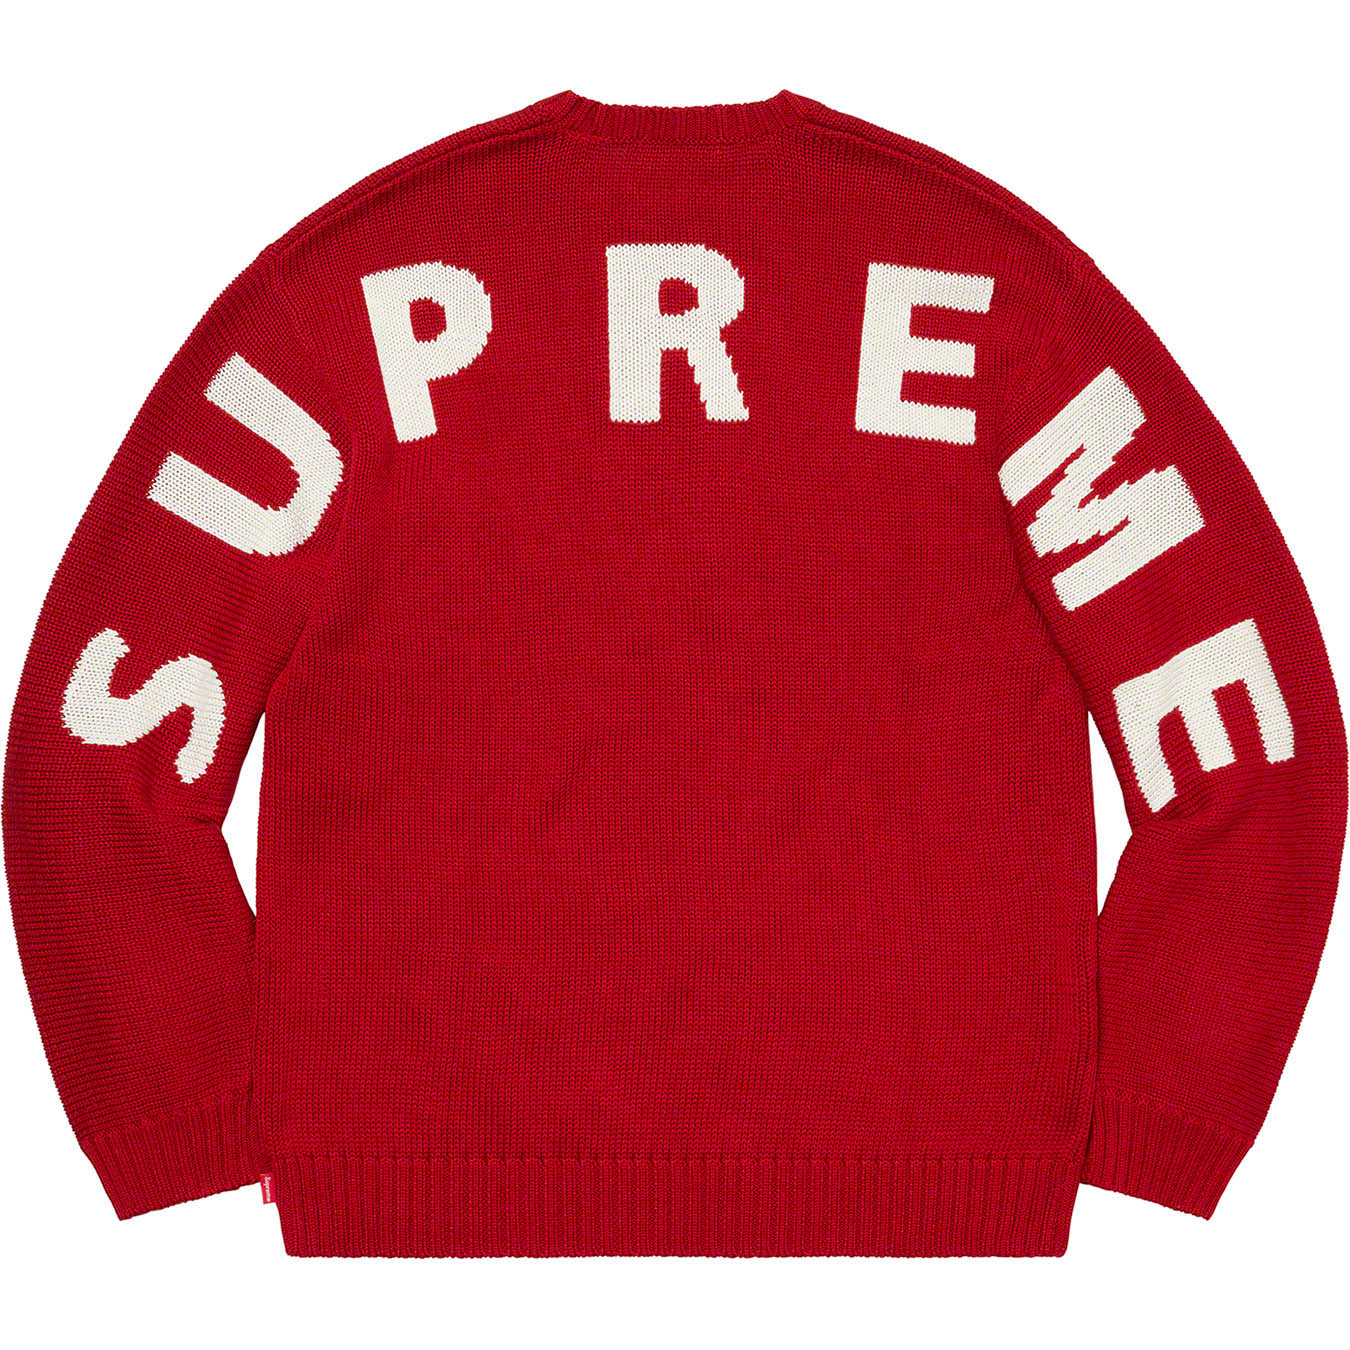 Supreme Back Logo Sweater 20ss   Lサイズ